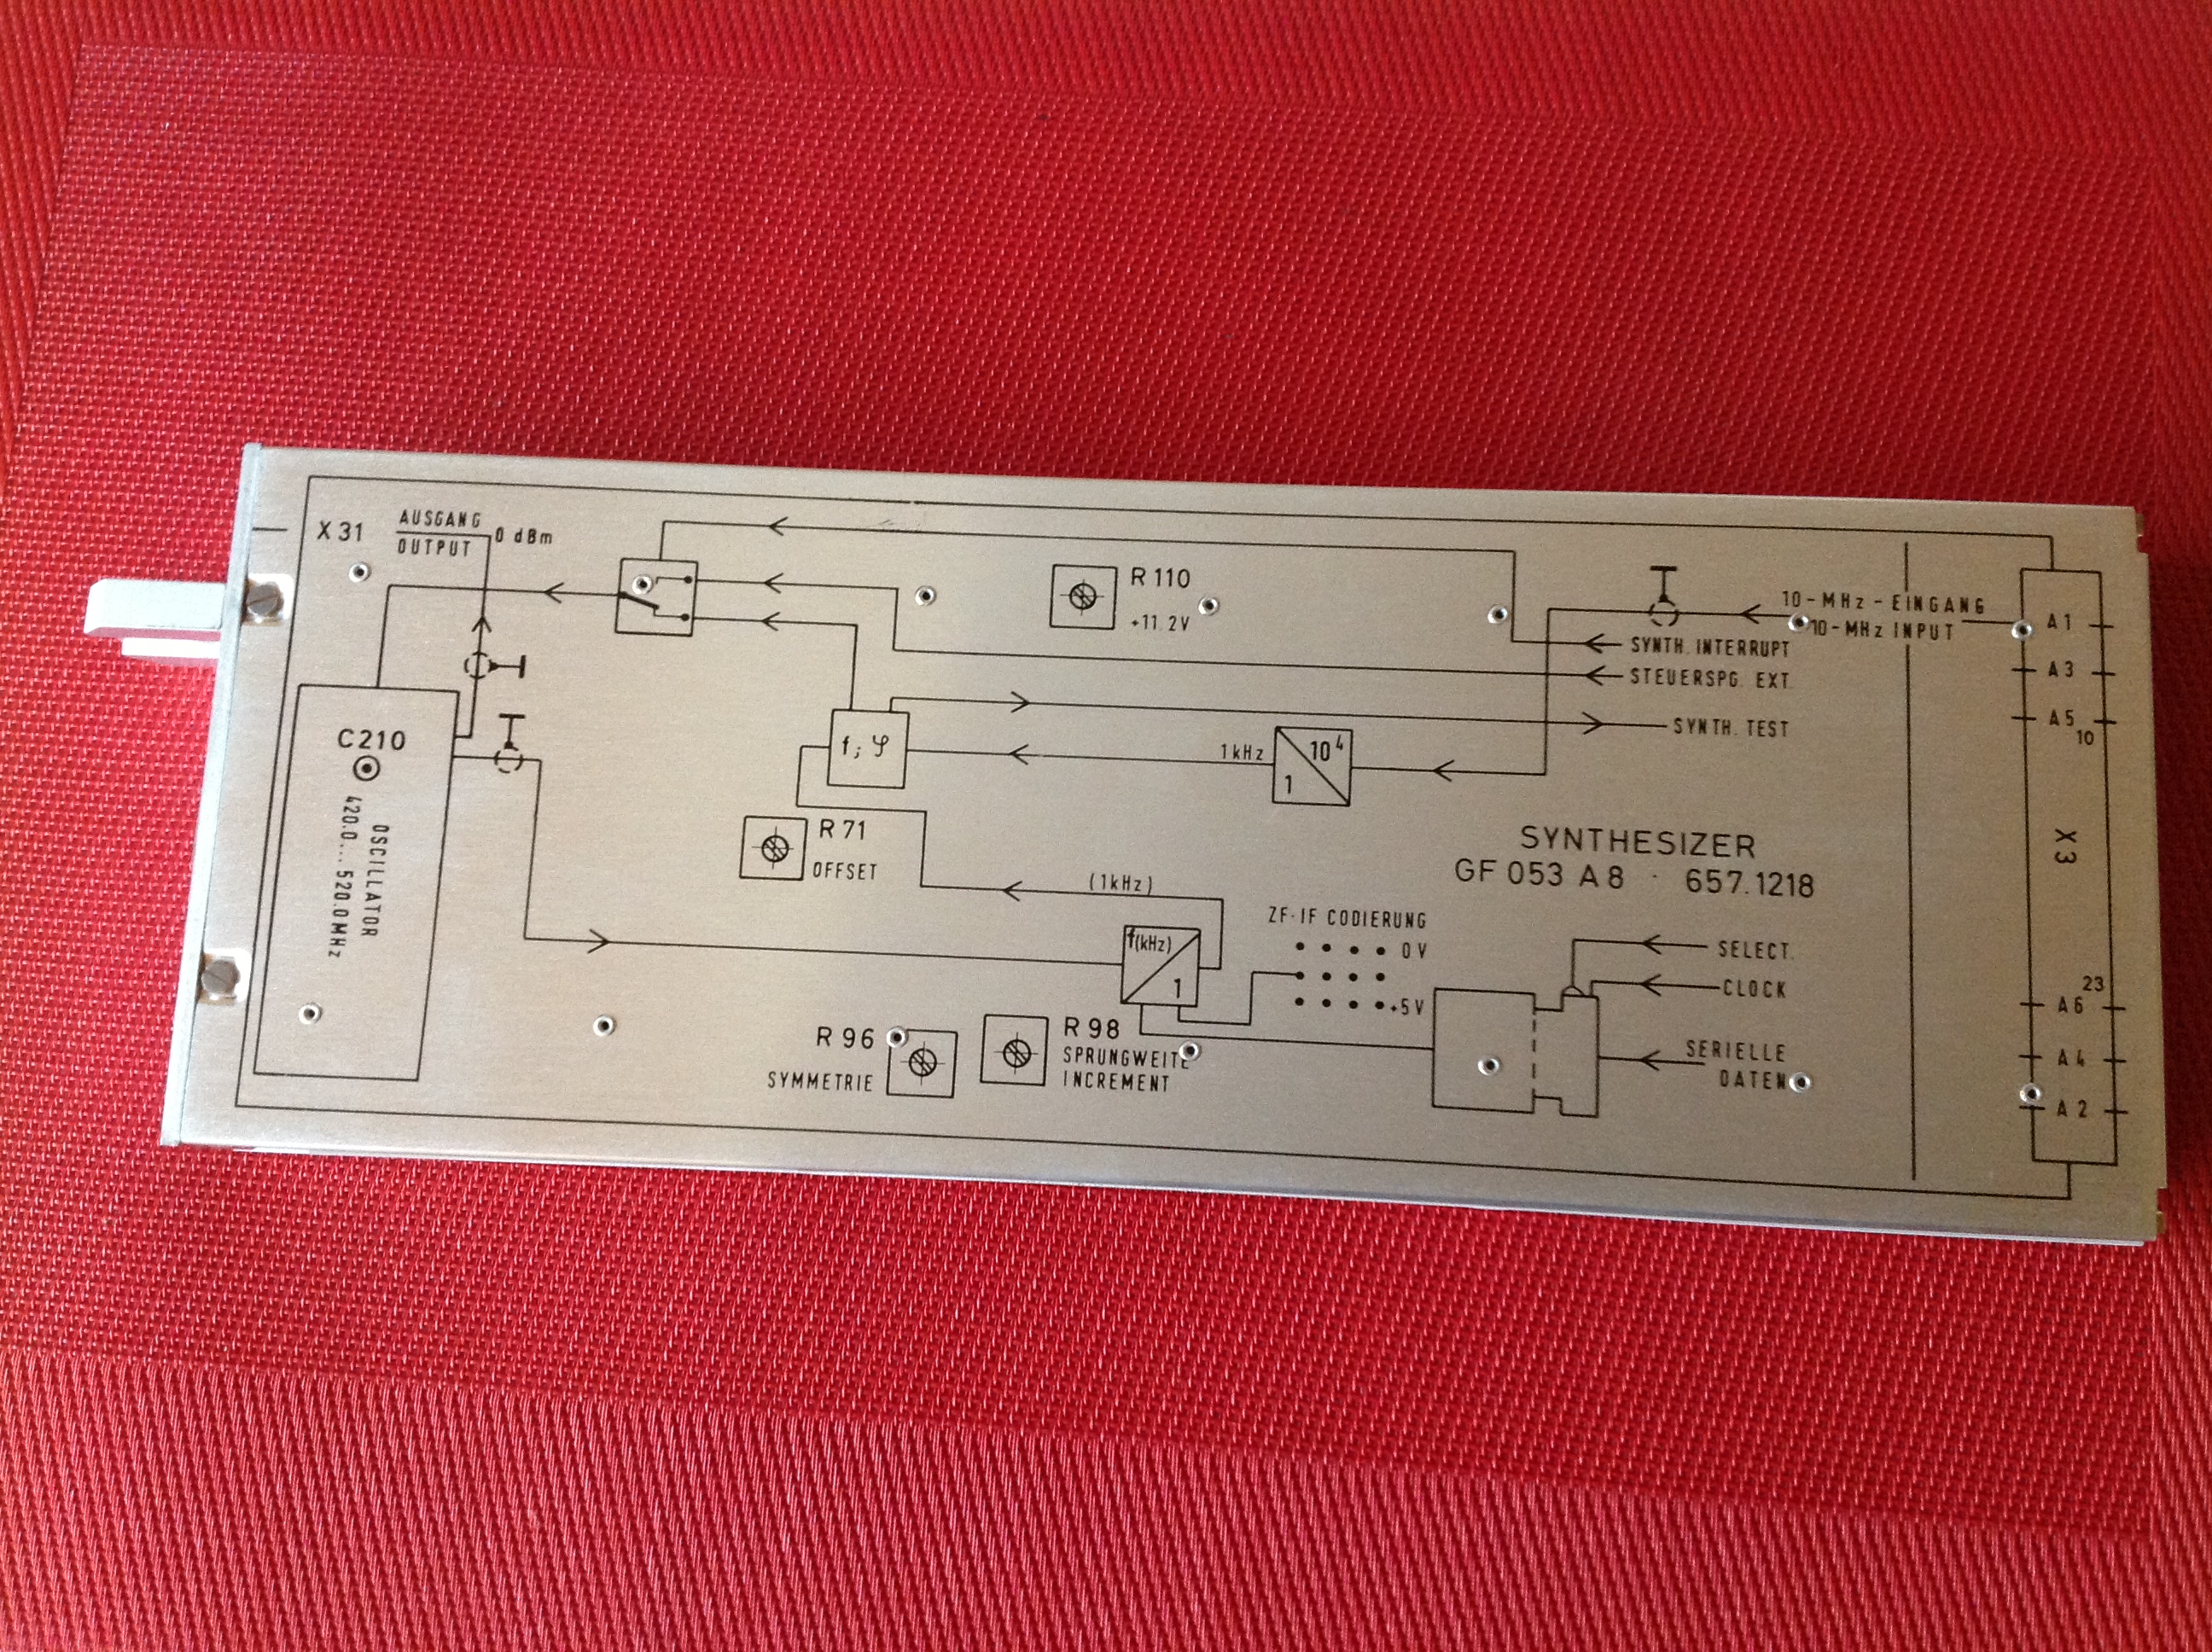 Rohde &amp; Schwarz Einschub Synthesizer GF 053 A8